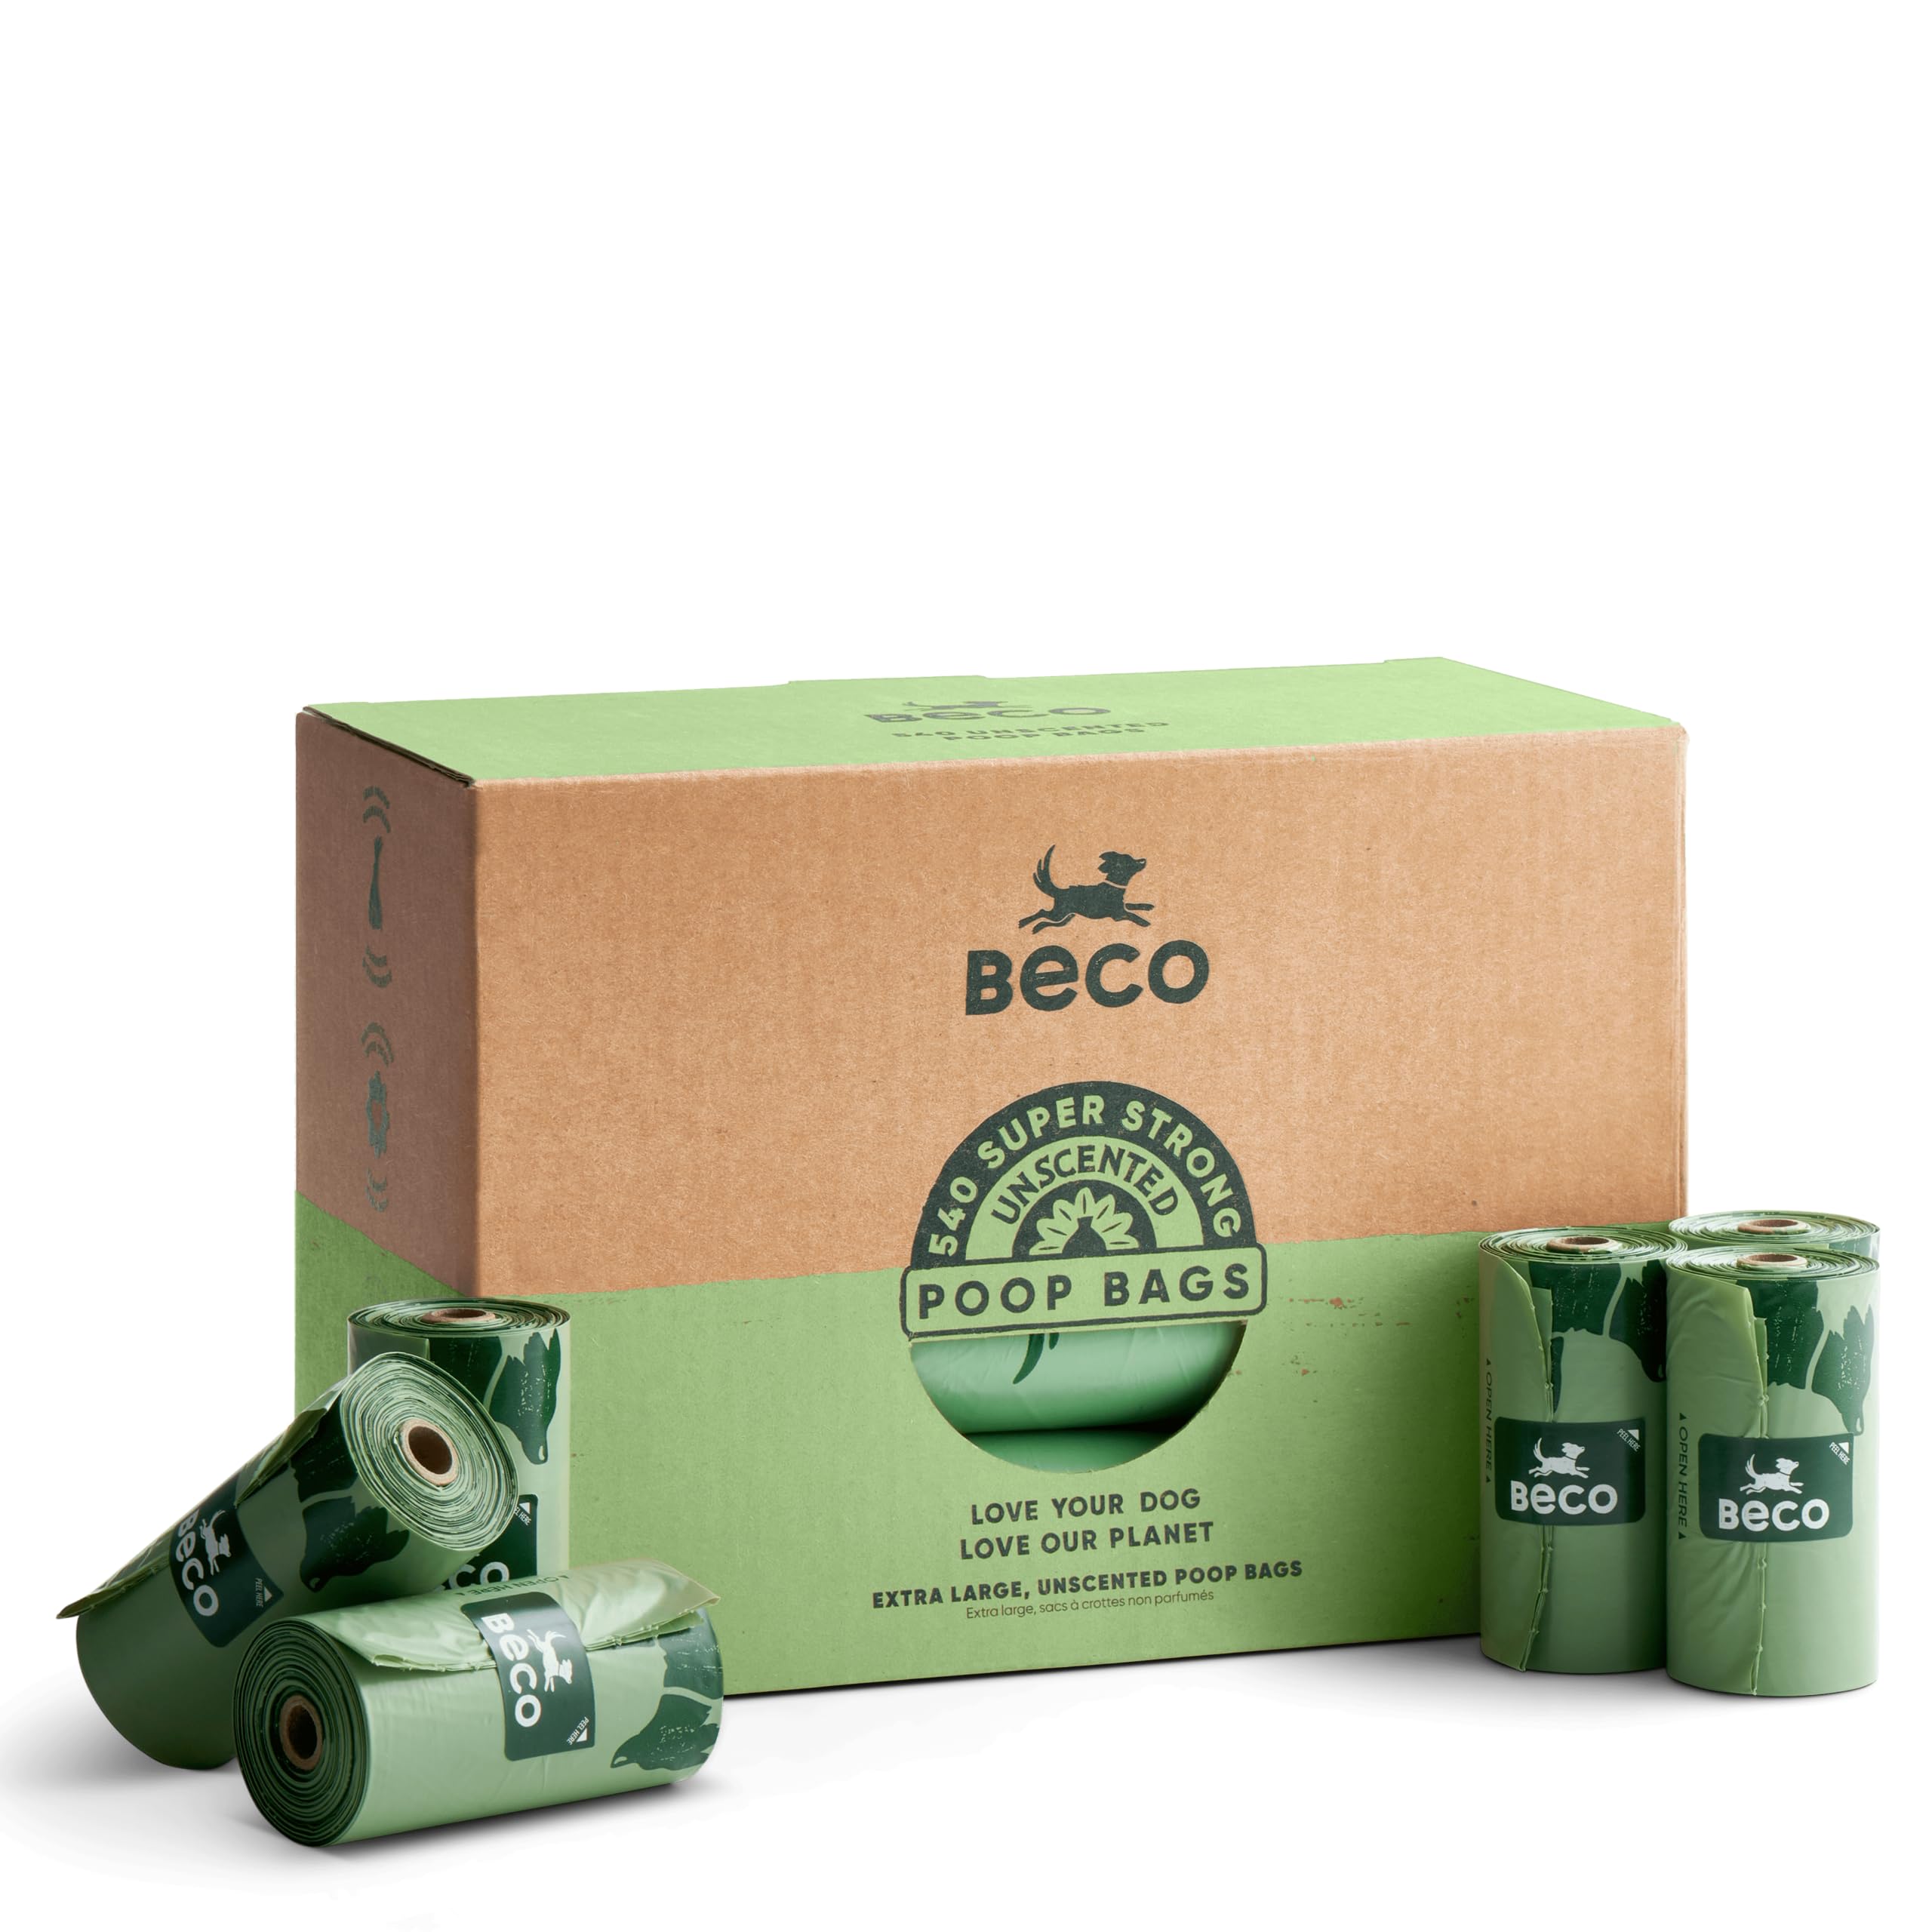 Beco Starke & große Kotbeutel – 540 Beutel (36 Rollen mit 15 Stück) – geruchlos – Spenderkompatible Hundekotbeutel, grün, BBG-540